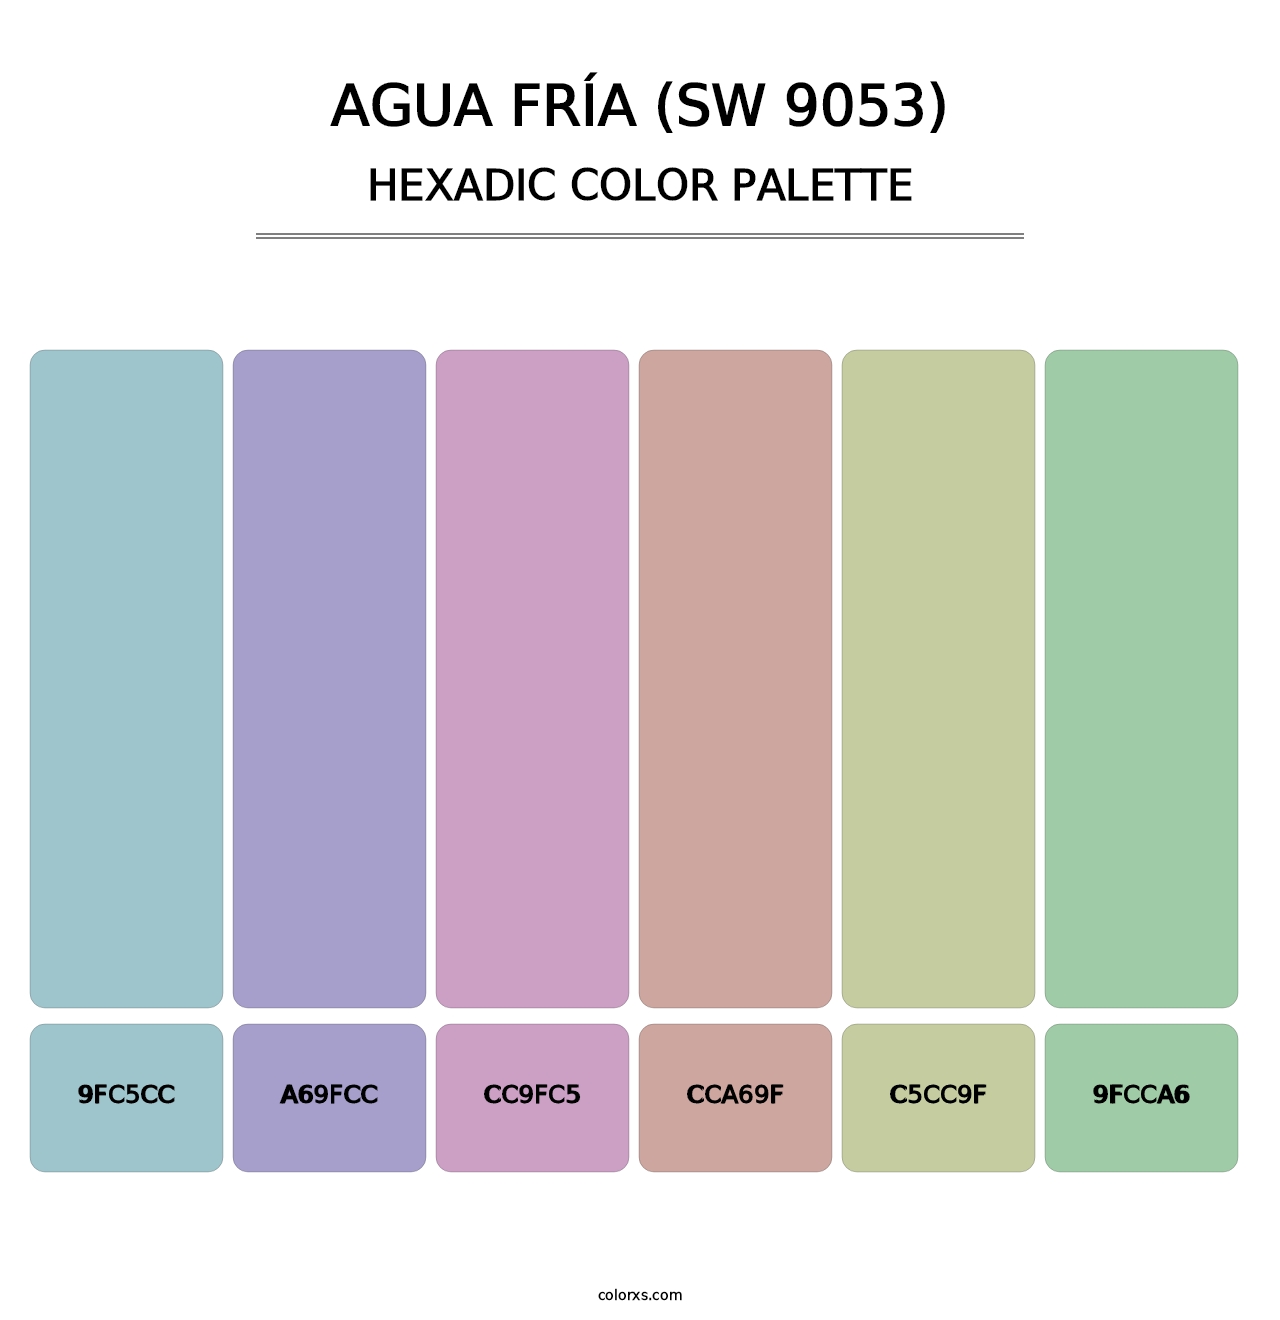 Agua Fría (SW 9053) - Hexadic Color Palette